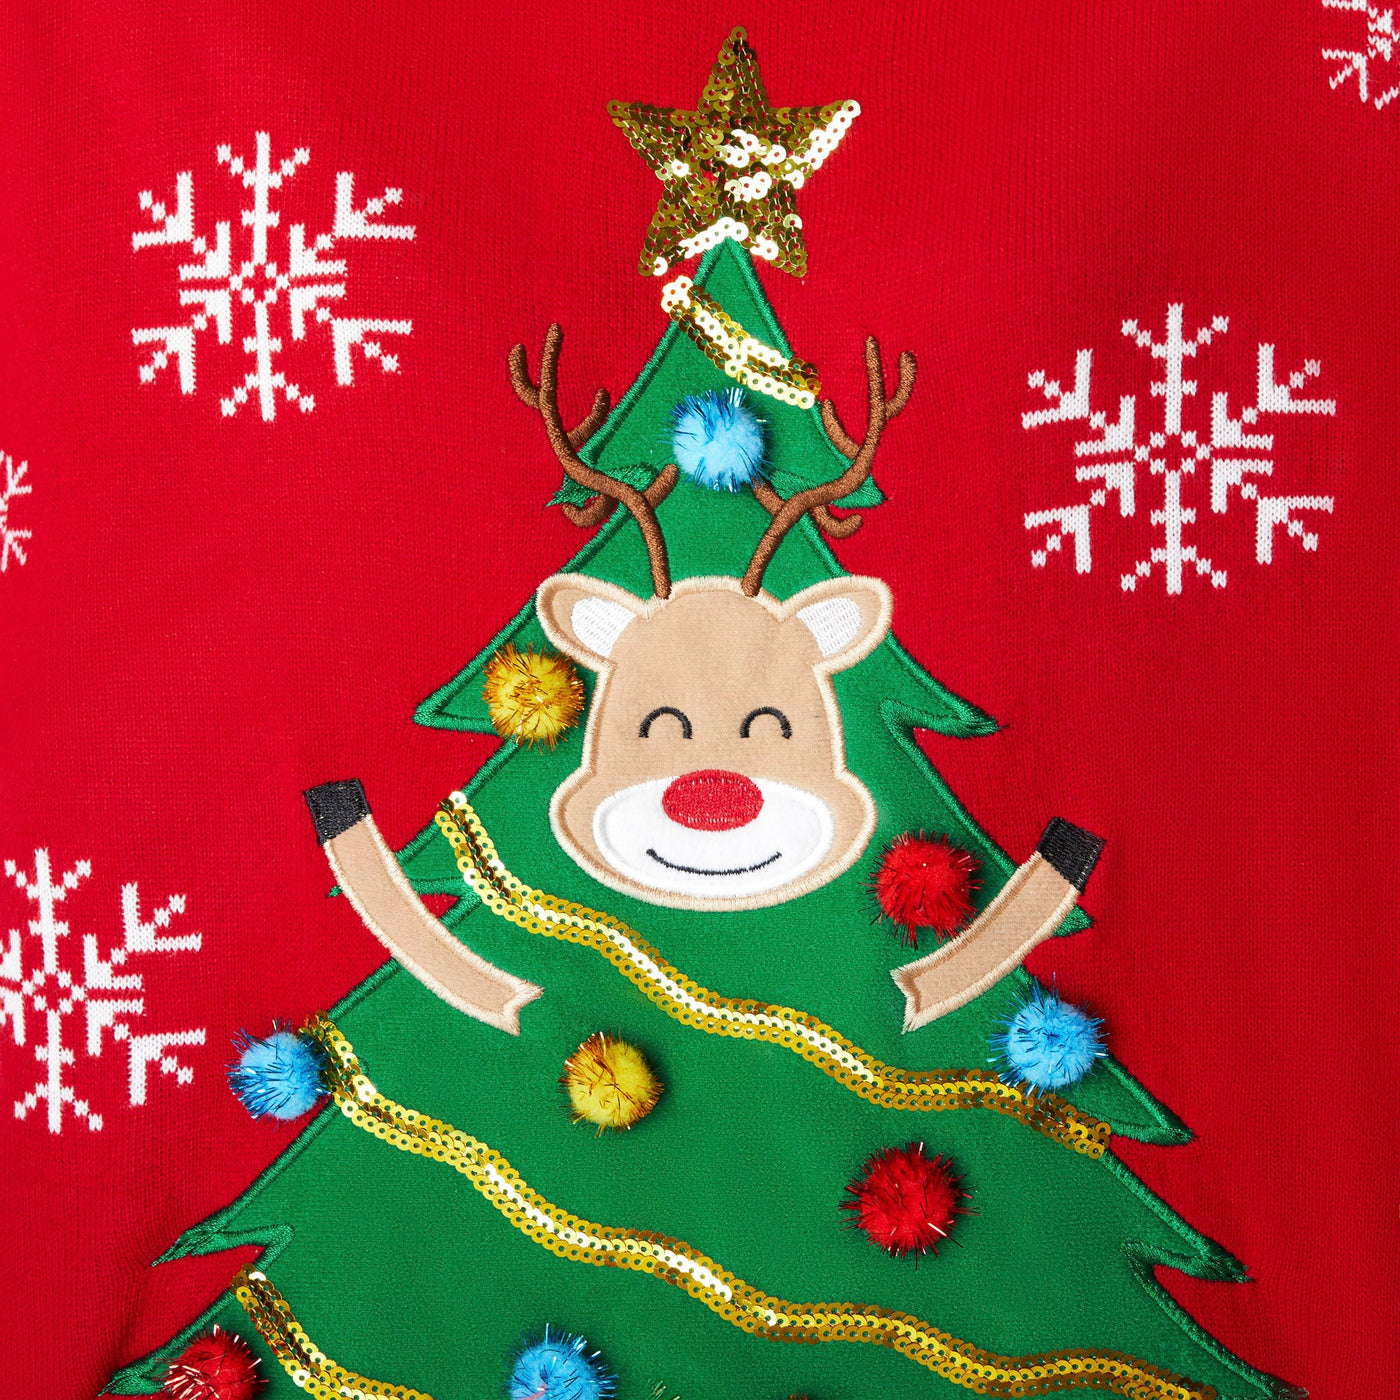 Men's Reindeer Tree Christmas Sweater